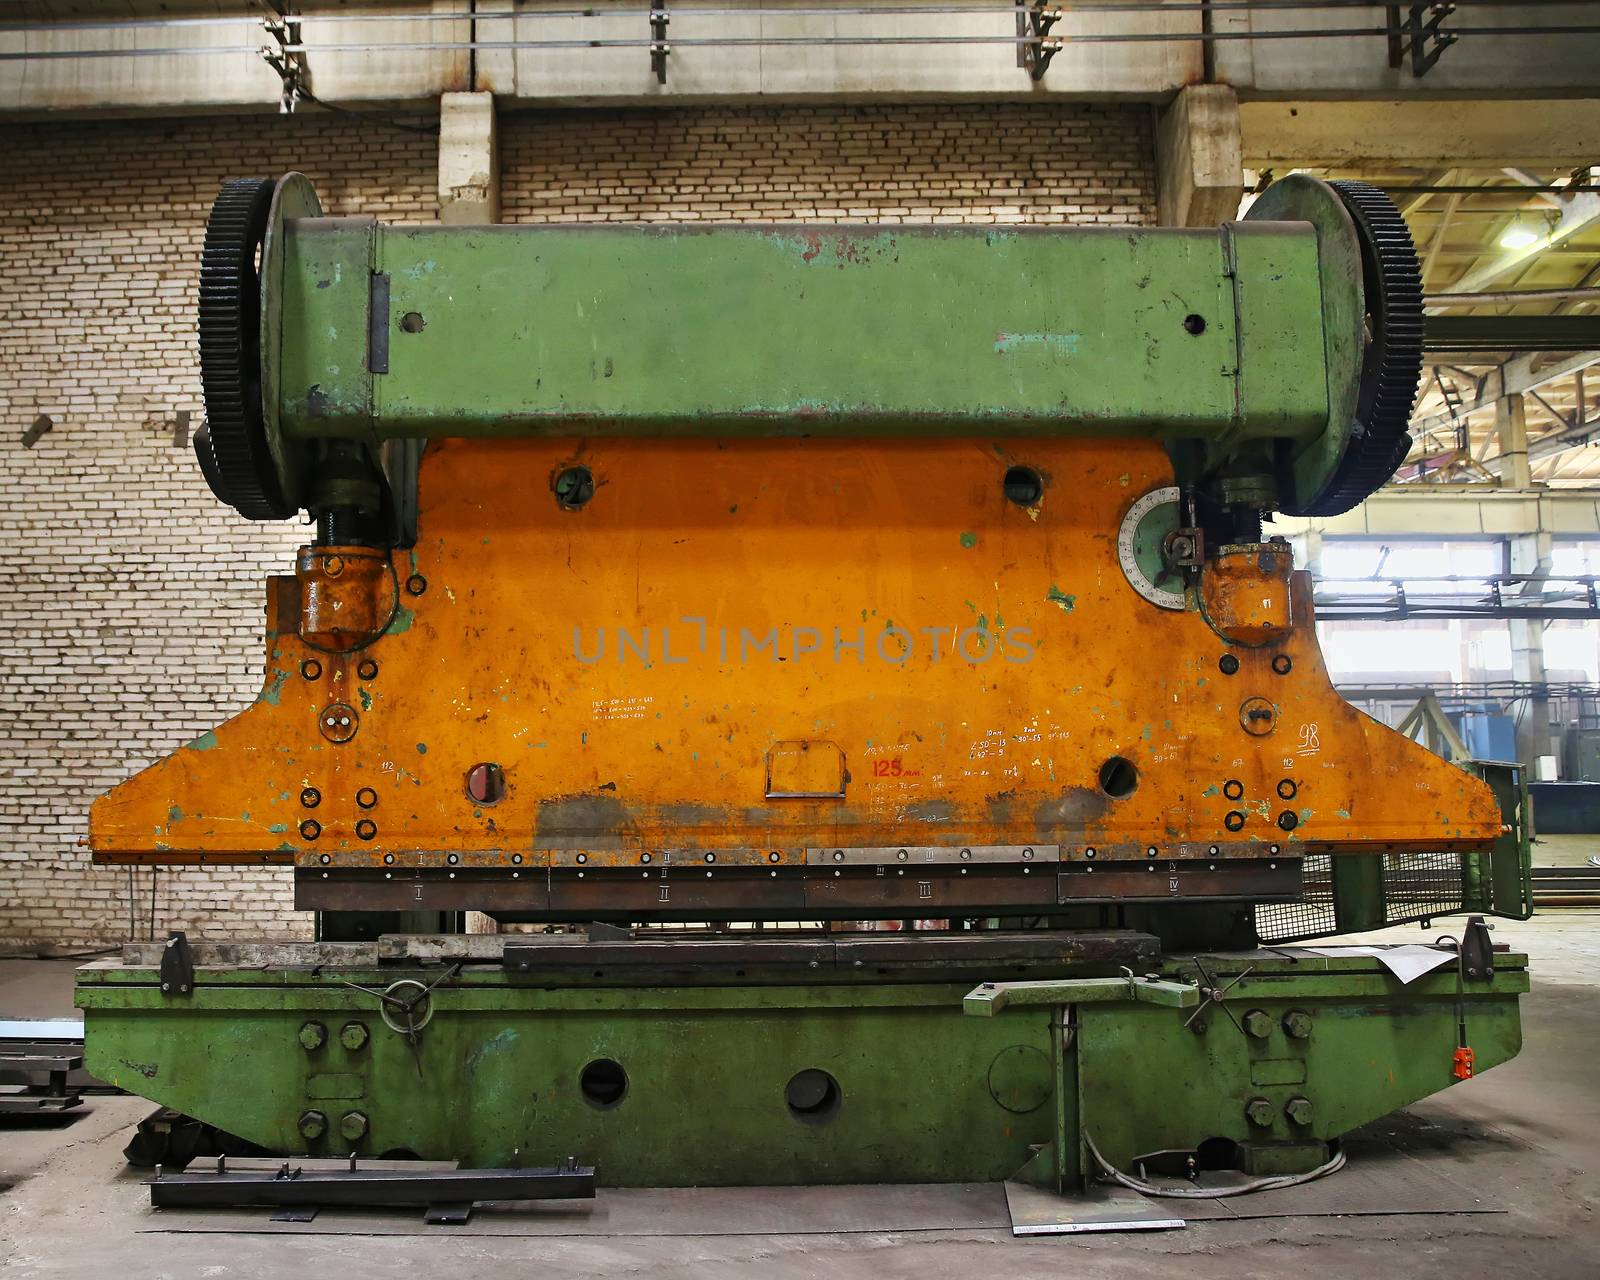 Old industrial press for bending steel sheets